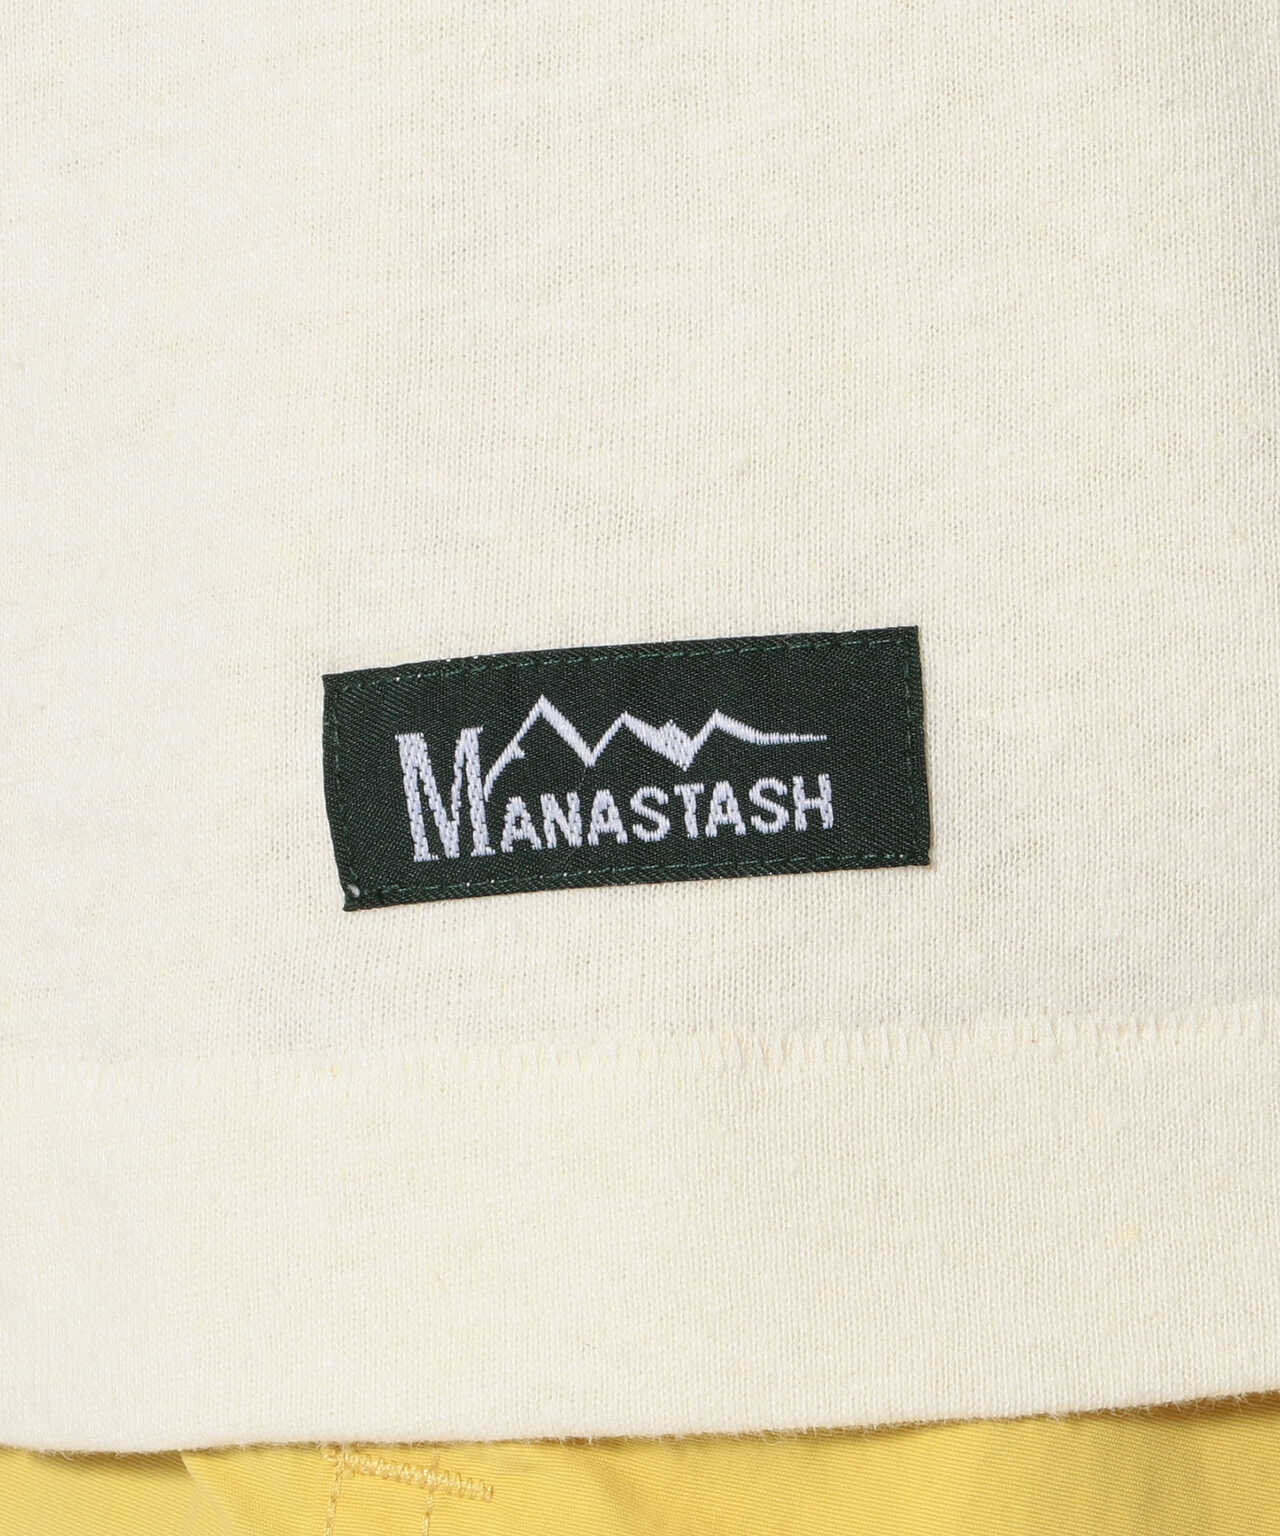 MANASTASH/マナスタッシュ/HEMP TEE TOUR 22/ヘンプツアーTシャツ